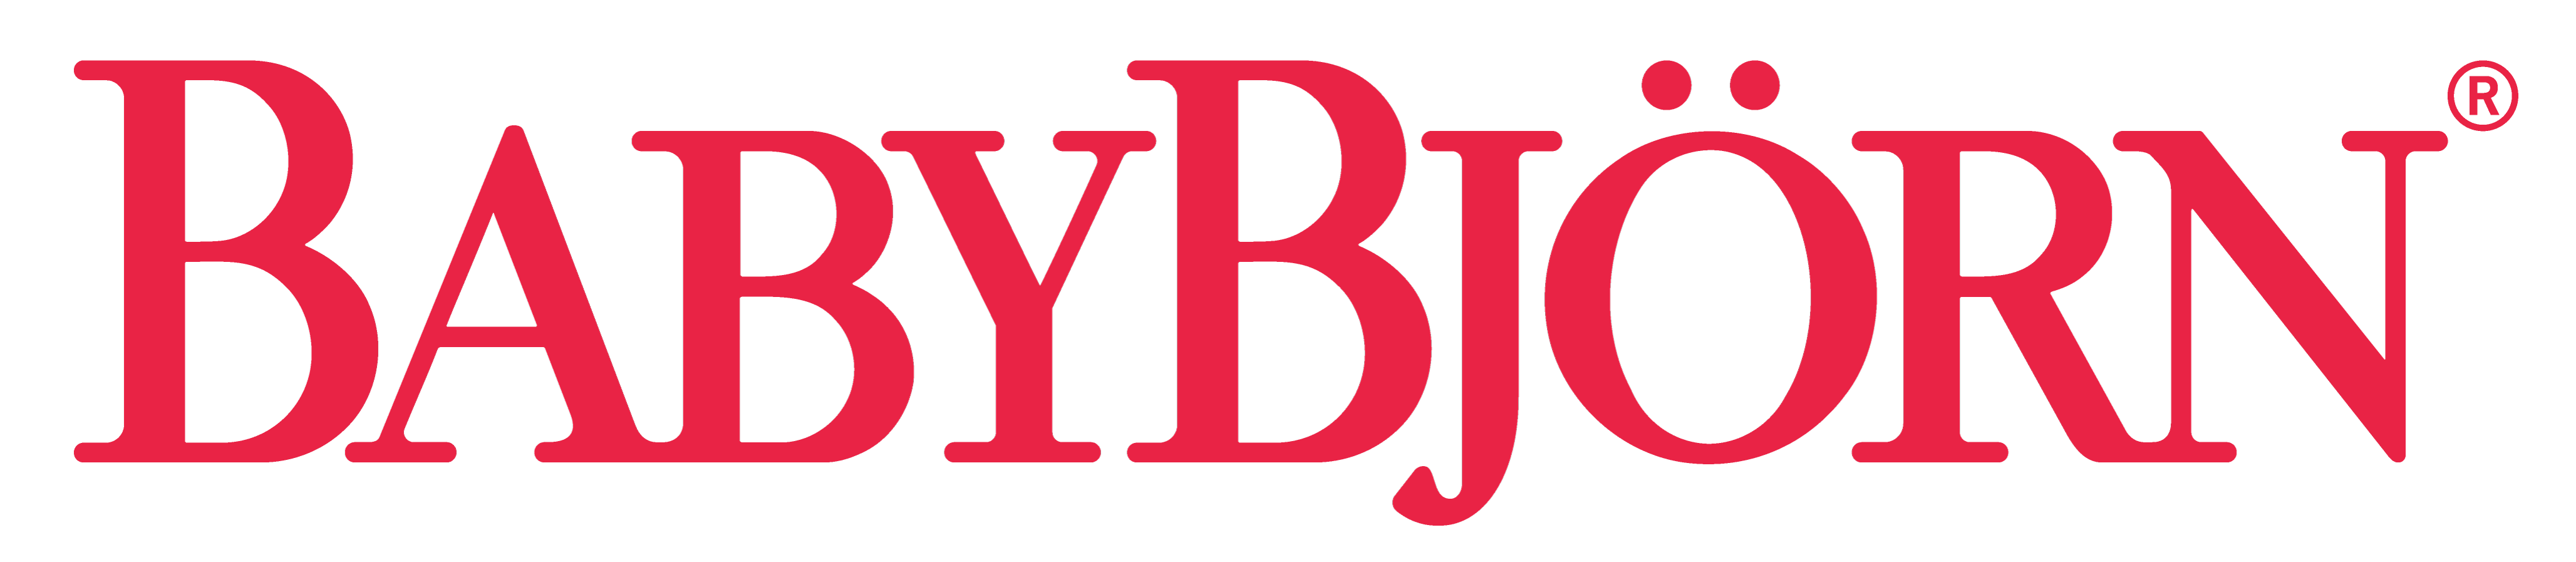 BabyBjorn---Logo